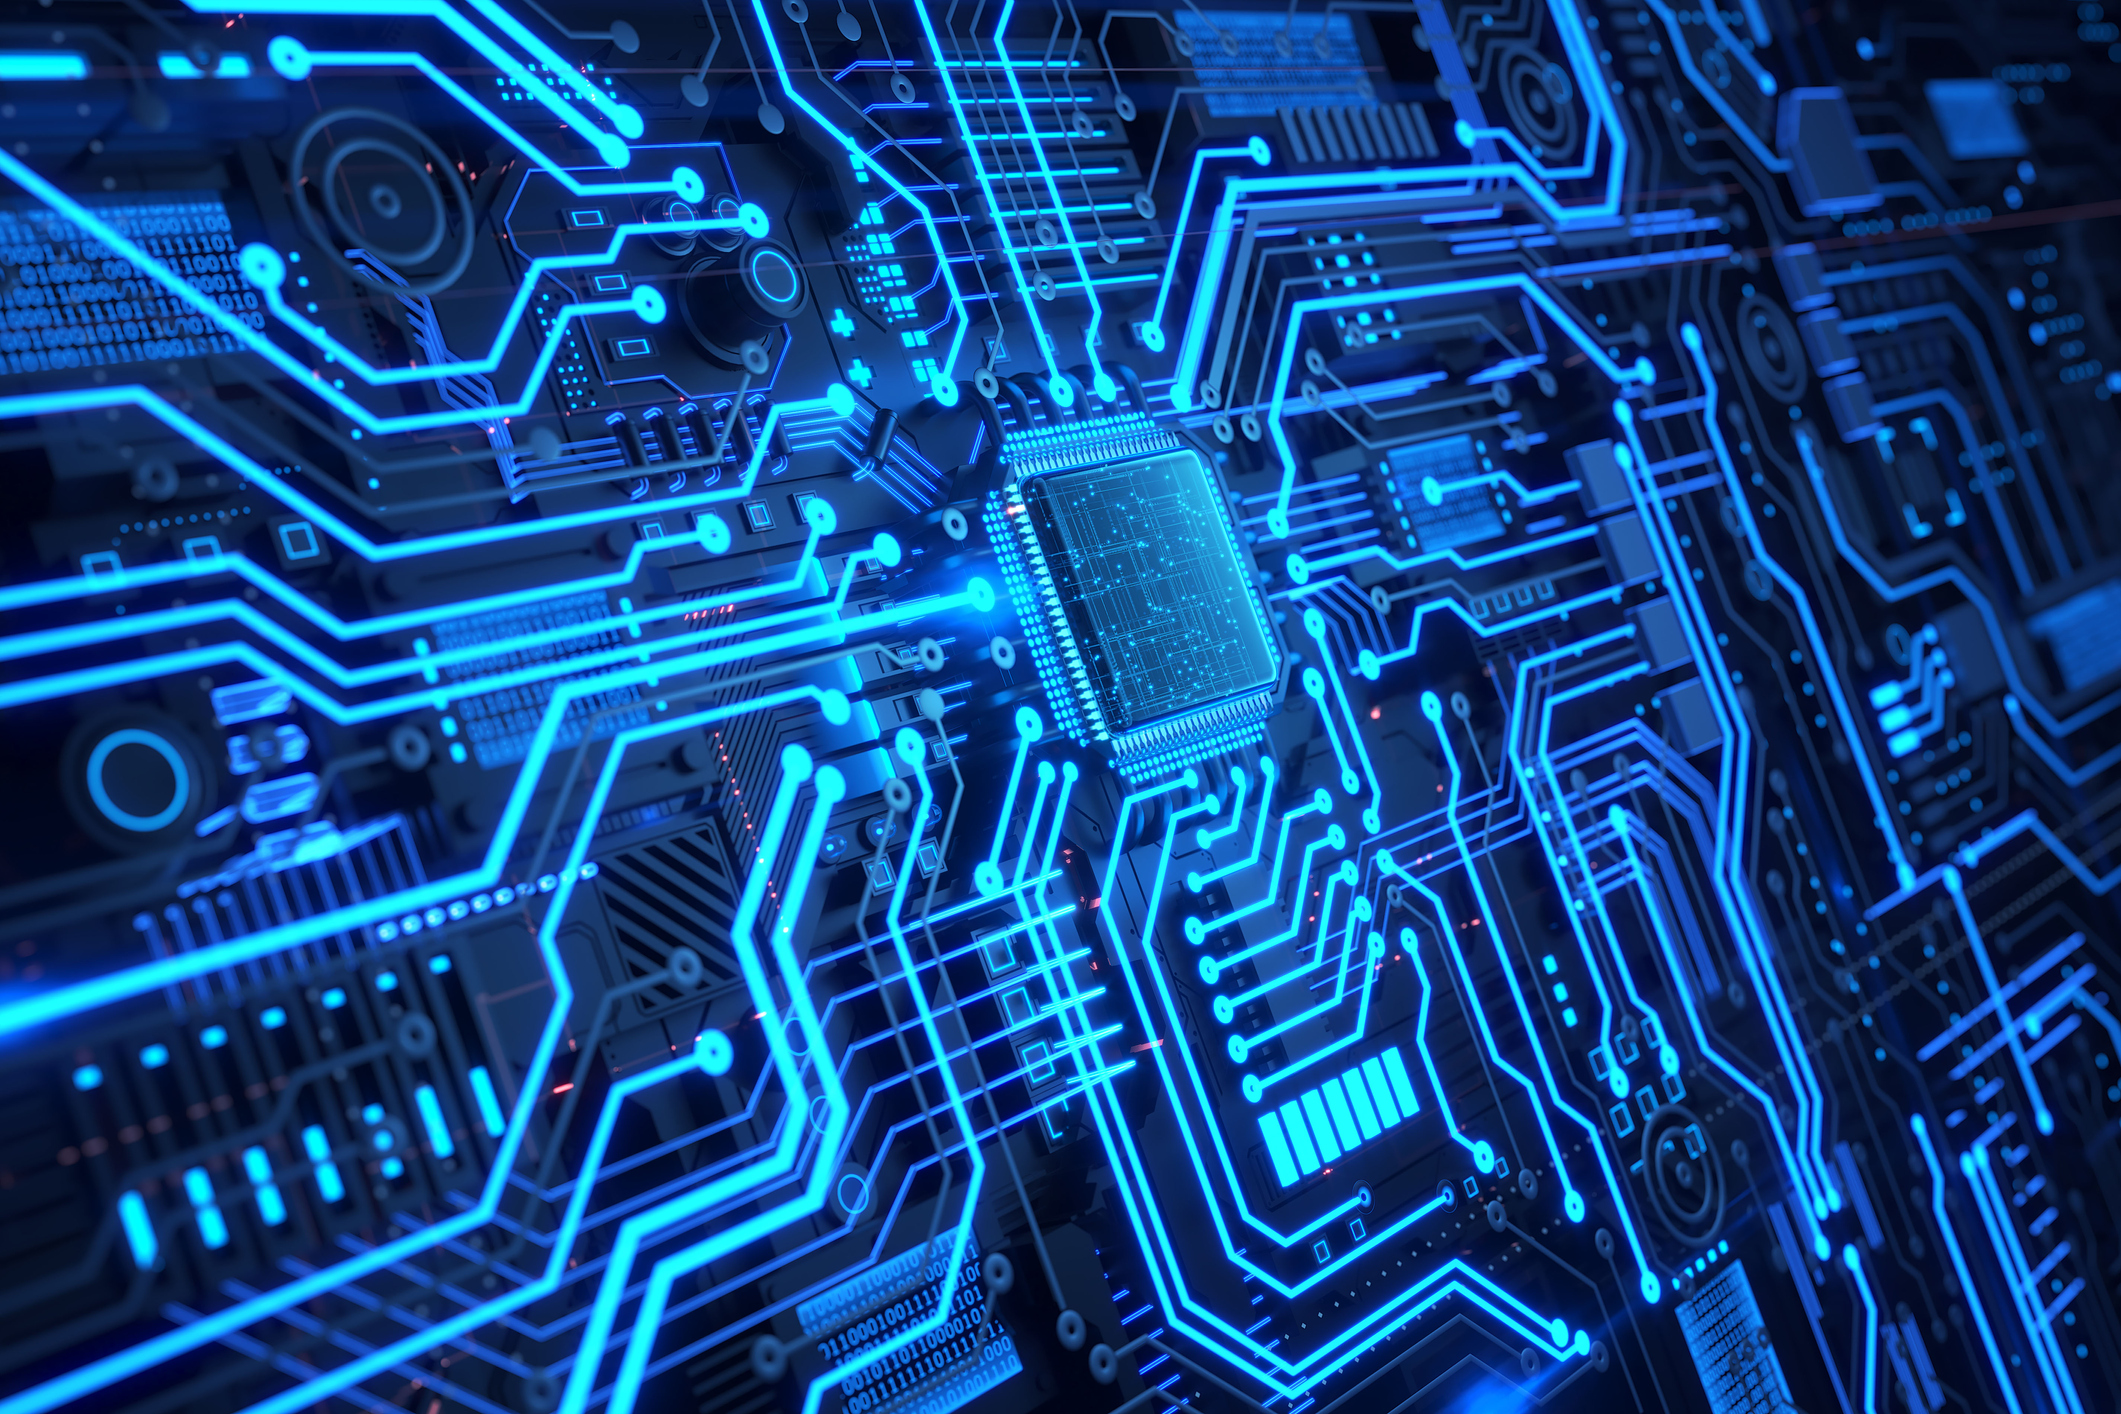 gain Accounting fresh Jitx wants to change the way engineers design circuit boards using code |  TechCrunch